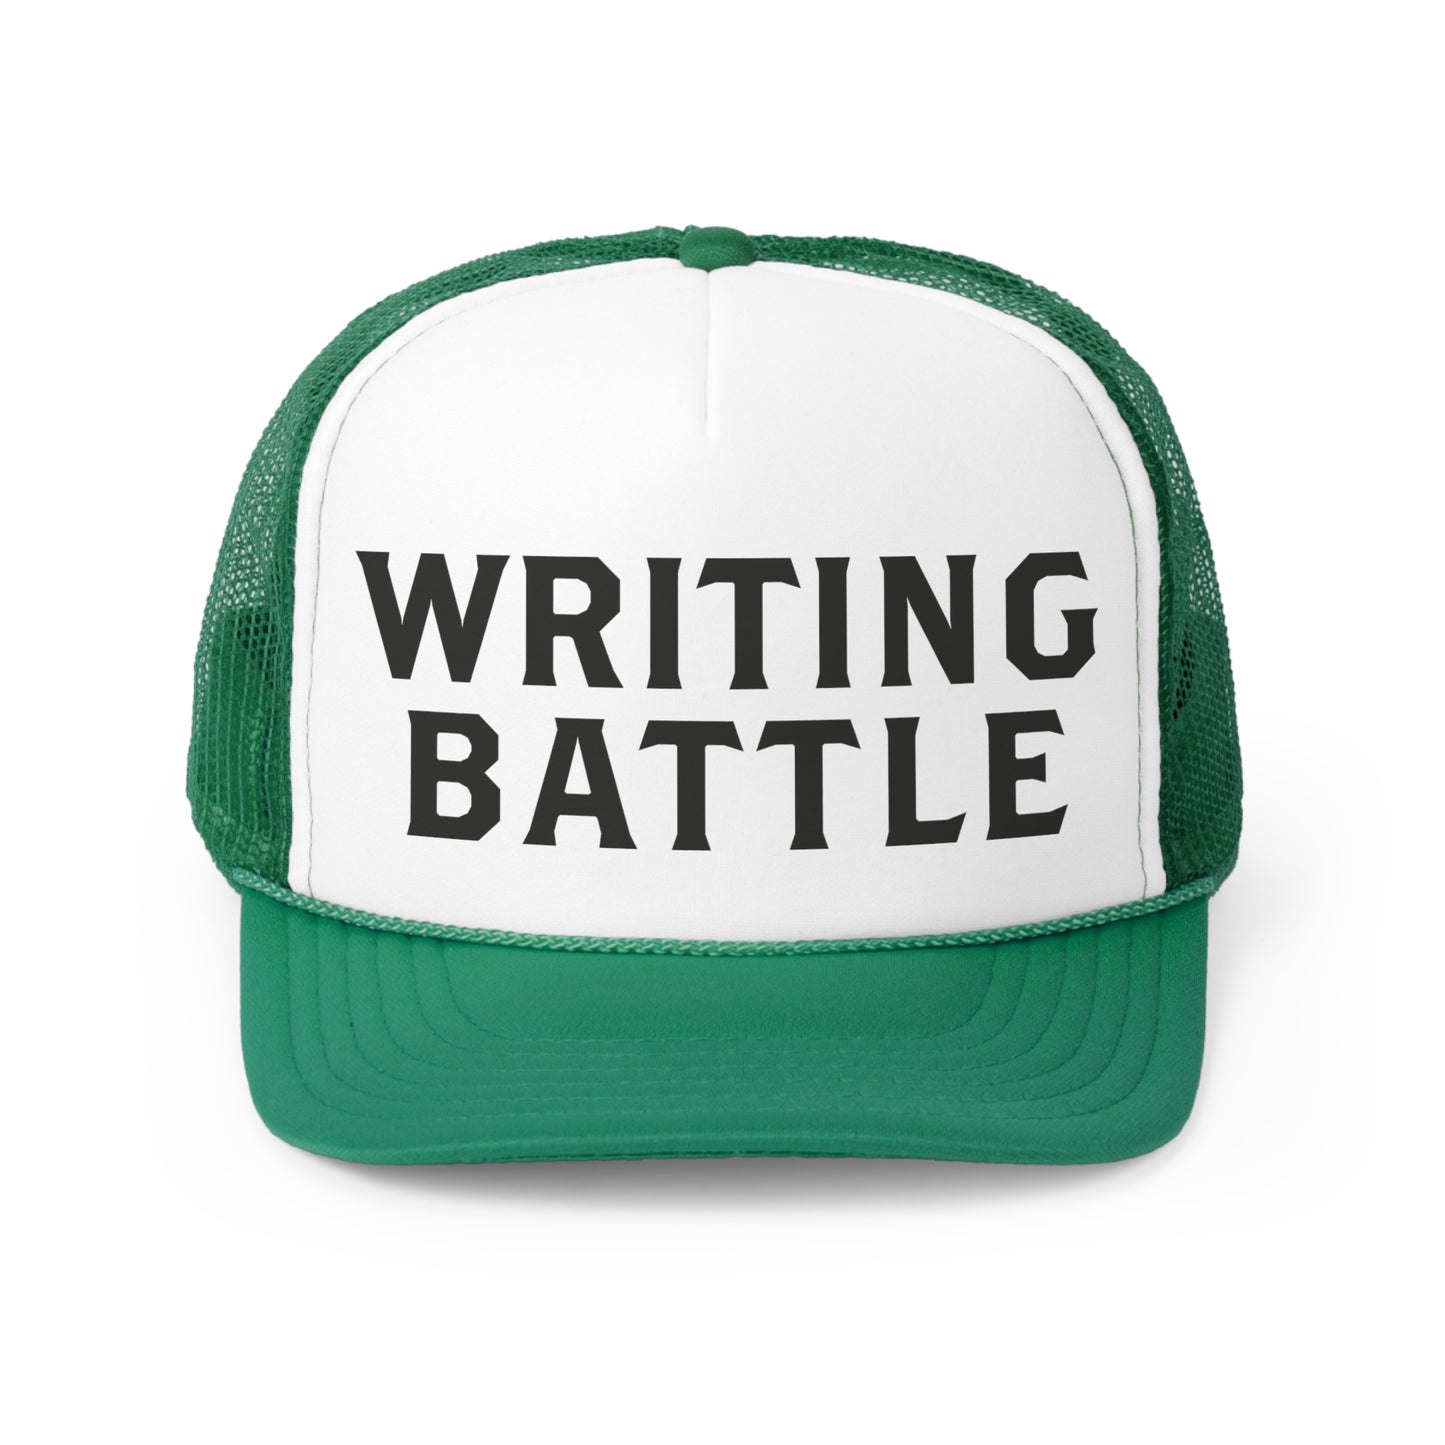 Writing Battle Trucker Caps